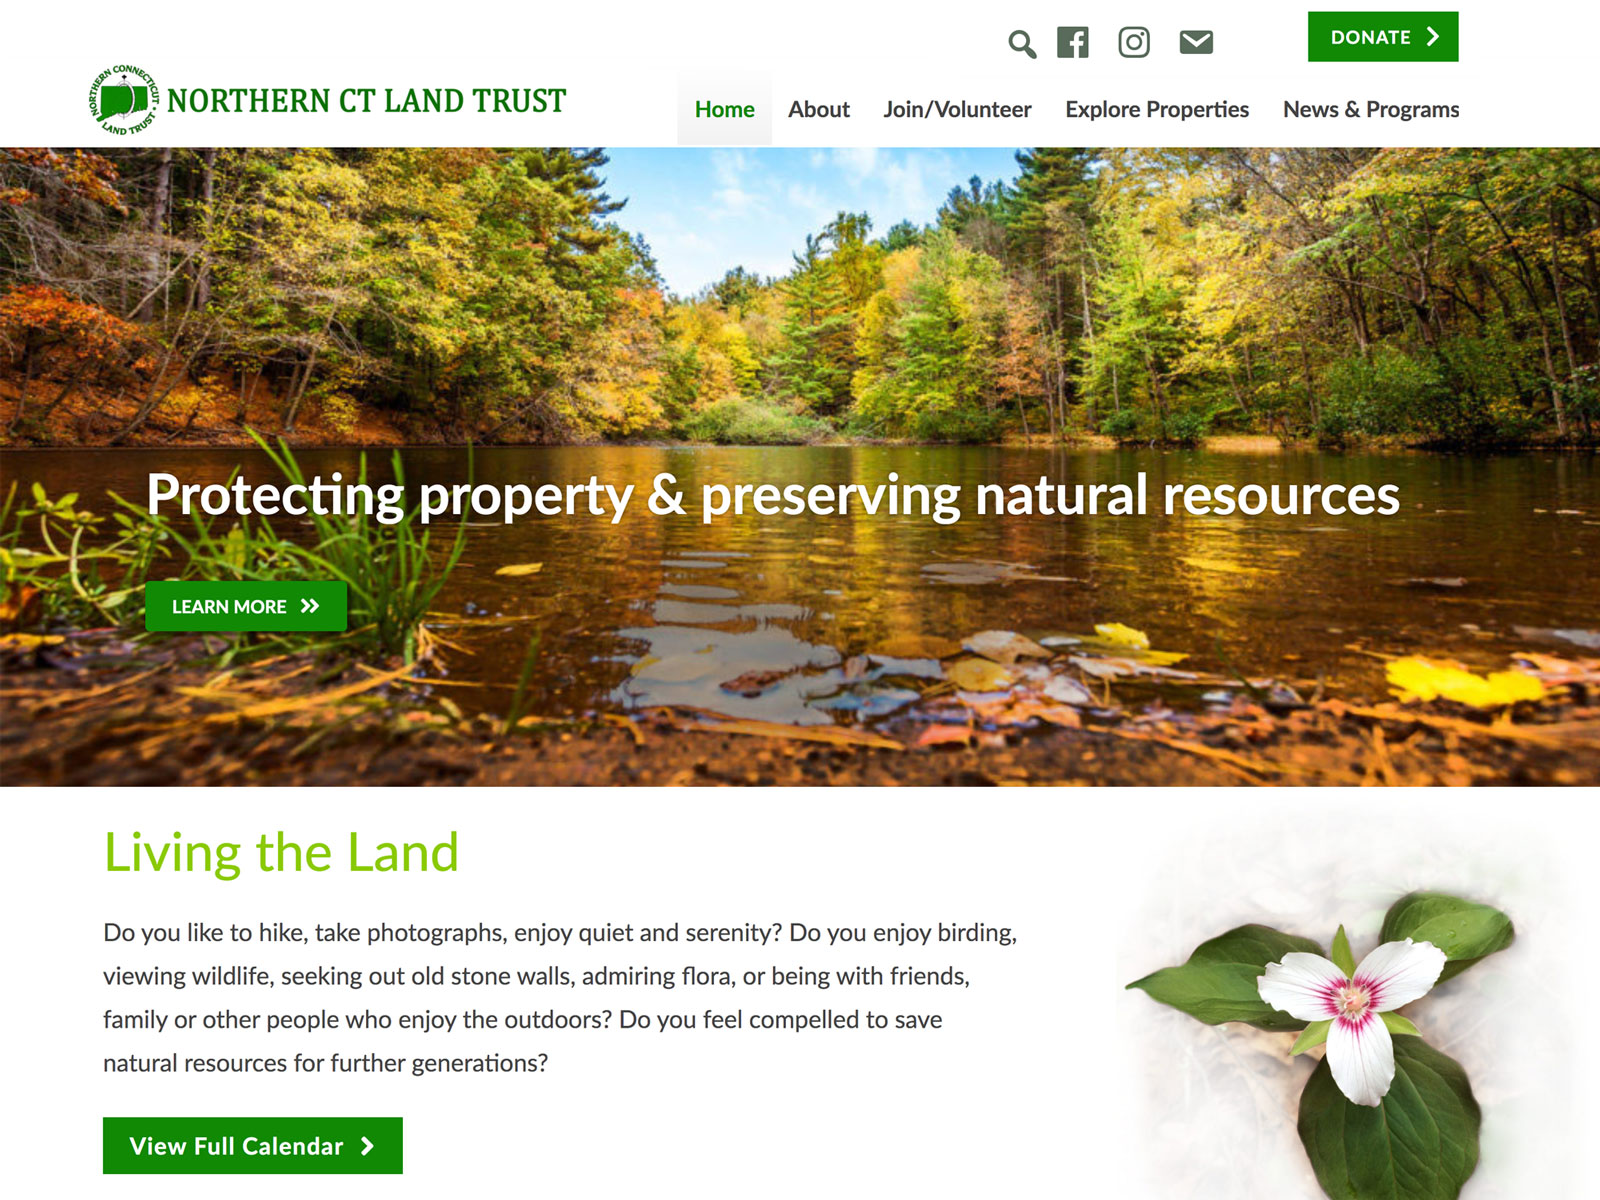 Northern Connecticut Land Trust